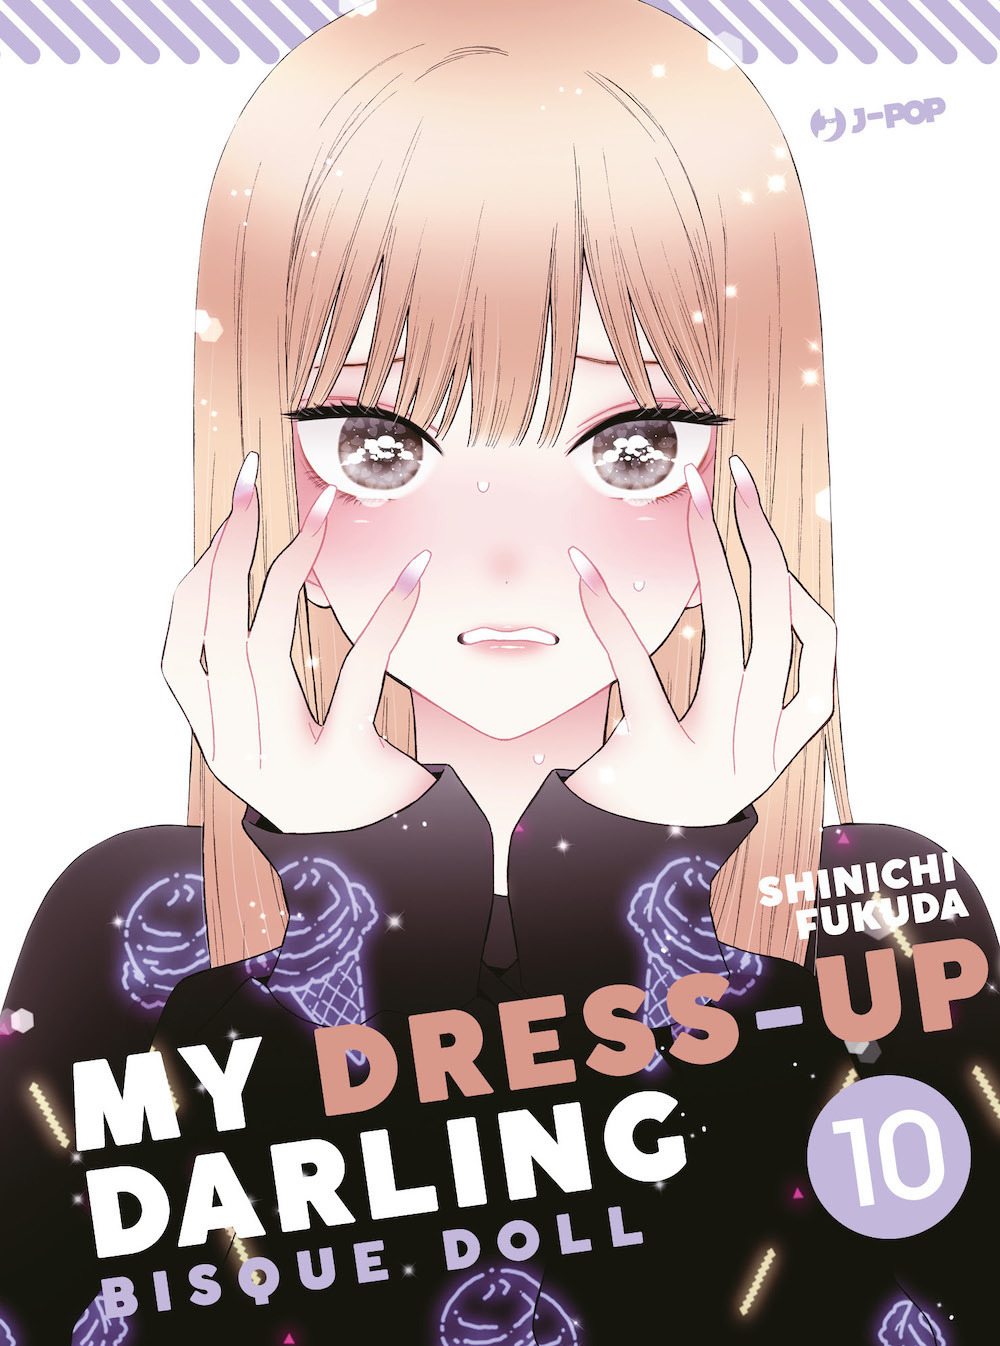  My dress up darling. Bisque doll (Vol. 6) - Fukuda